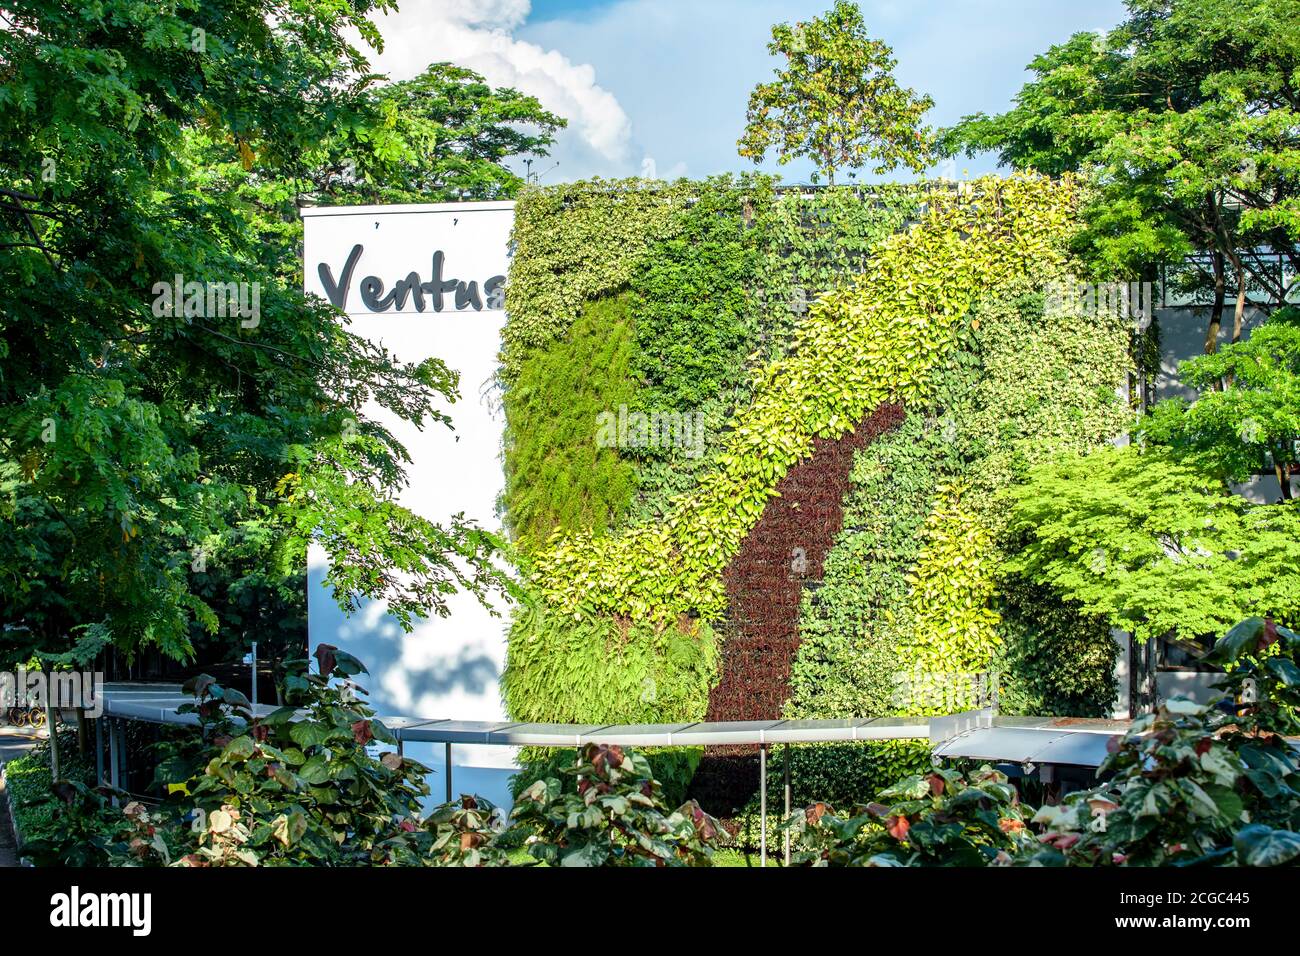 Ventus, National University of Singapore Stock Photo